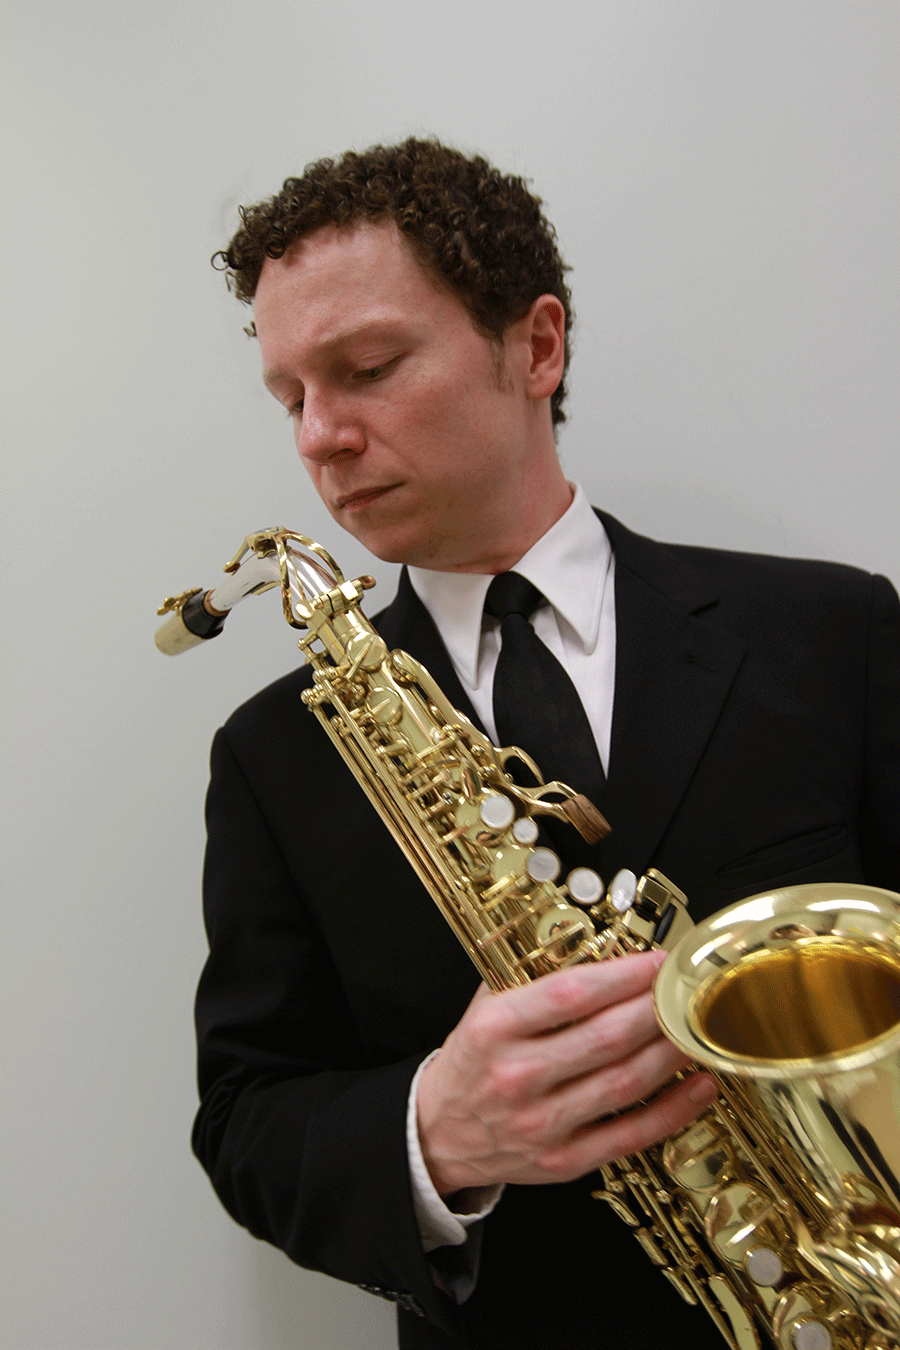 SoCA Saxophone faculty, Jeffrey Price